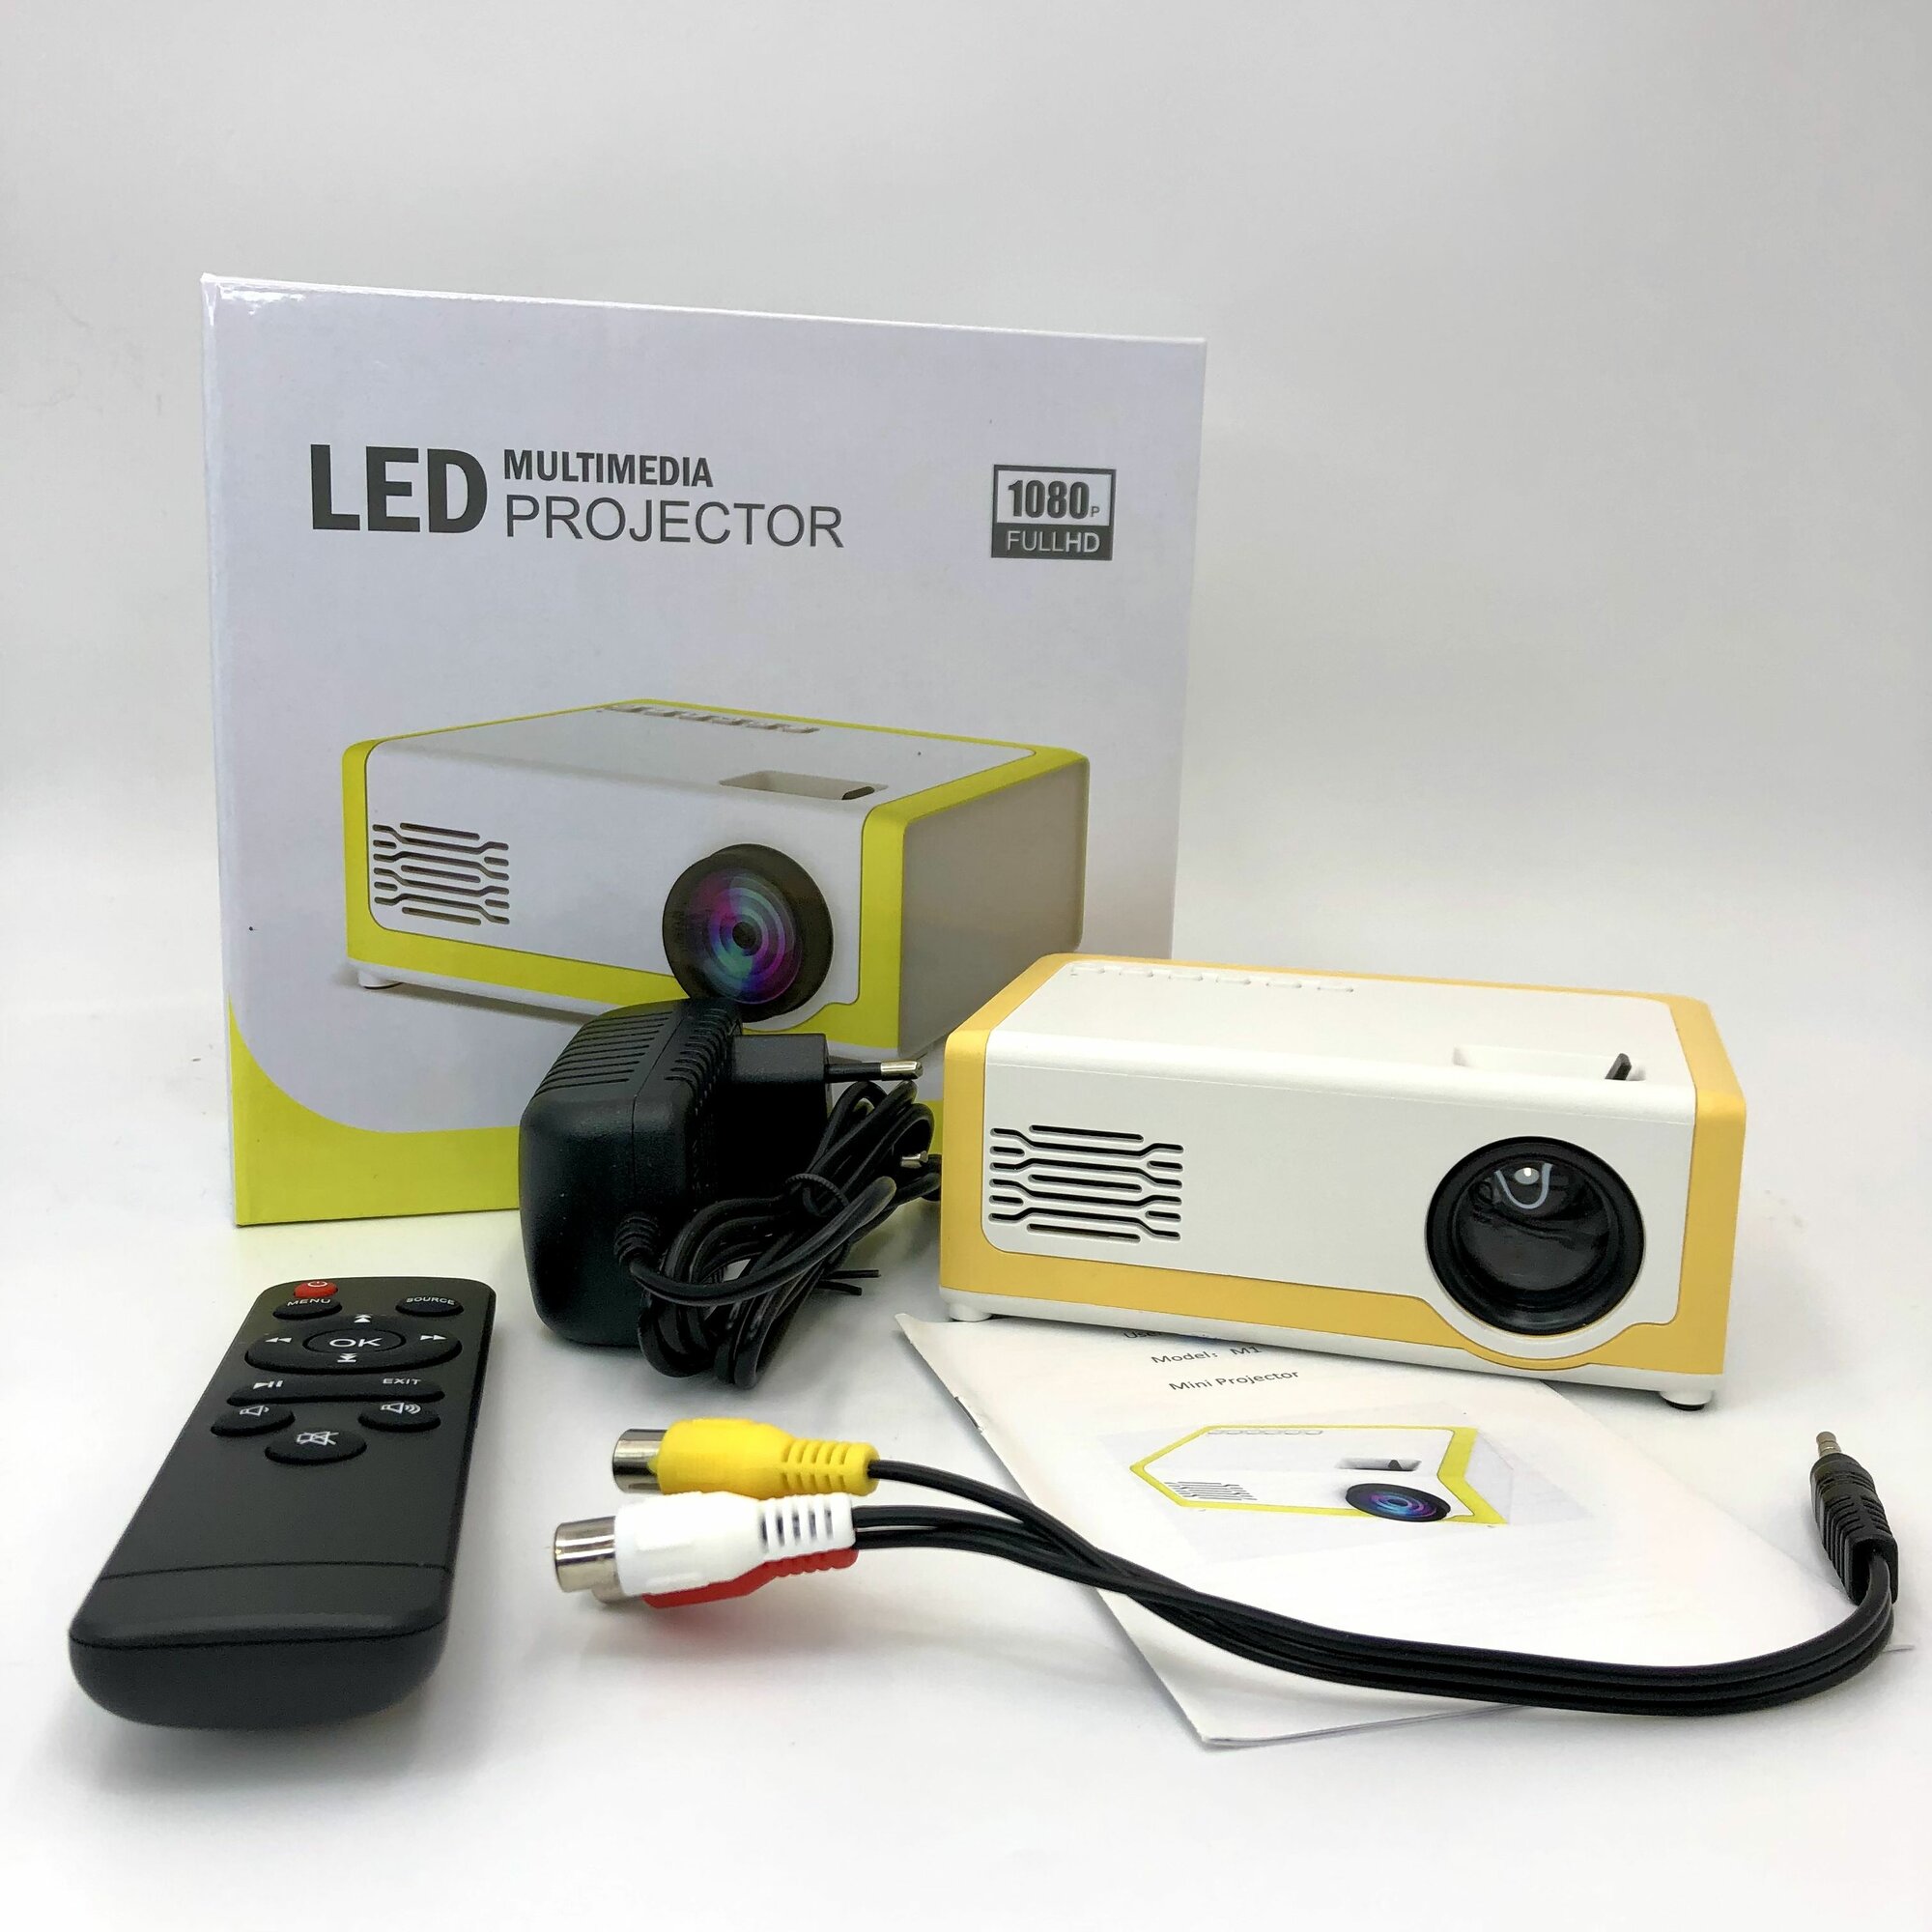 Проектор для дома / Led multimedia projector / мини кинопроектор 4k / видеопроектор домашний led / hd проектор